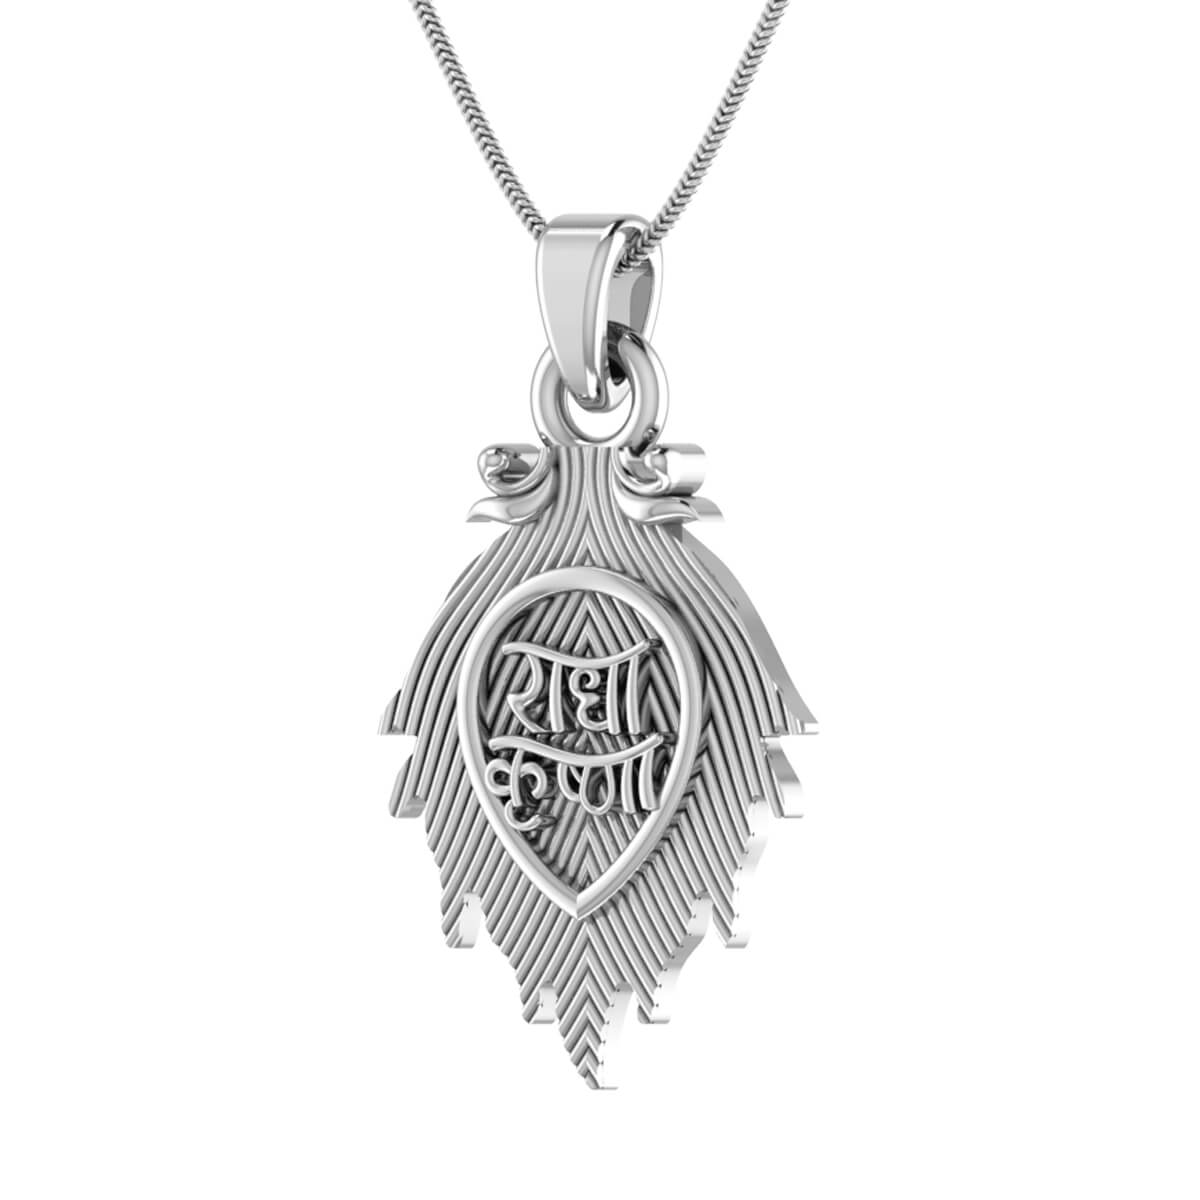 Radha krishna Silver Locket with chain